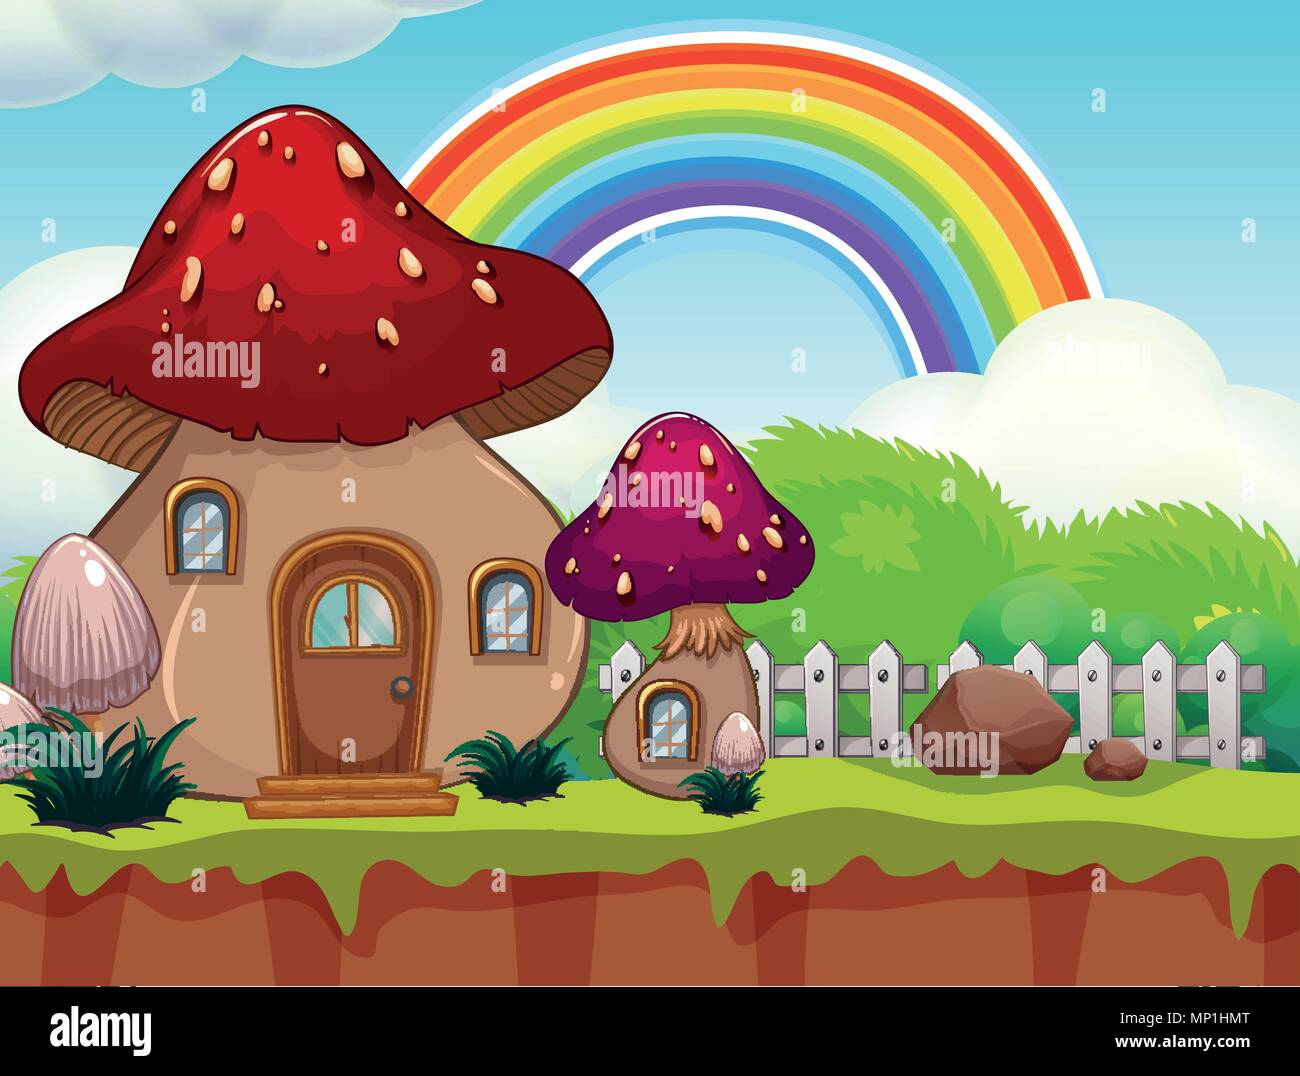 A Cute Cartoon Mushroom House illustration Stock Vector Image ...